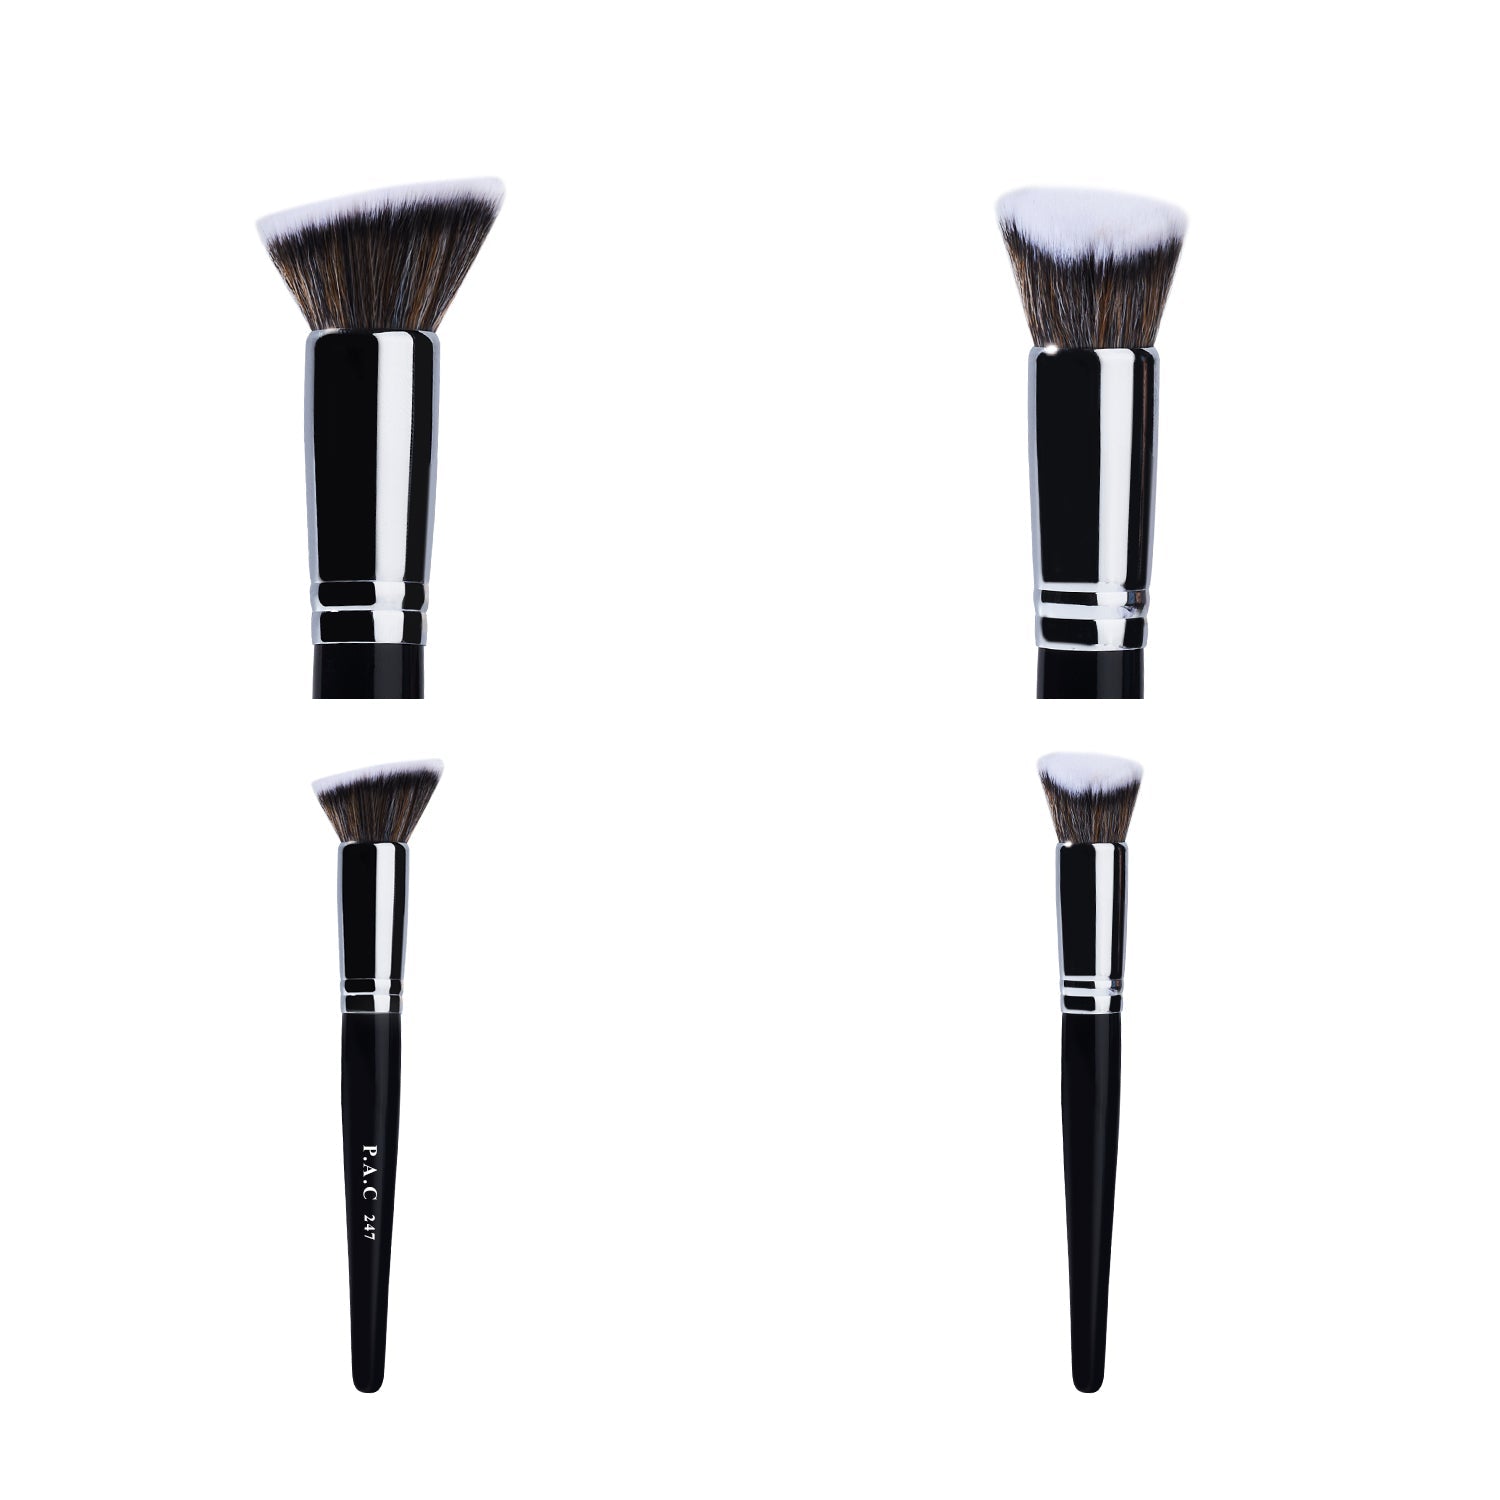 PAC Cosmetics Contouring Brush 247